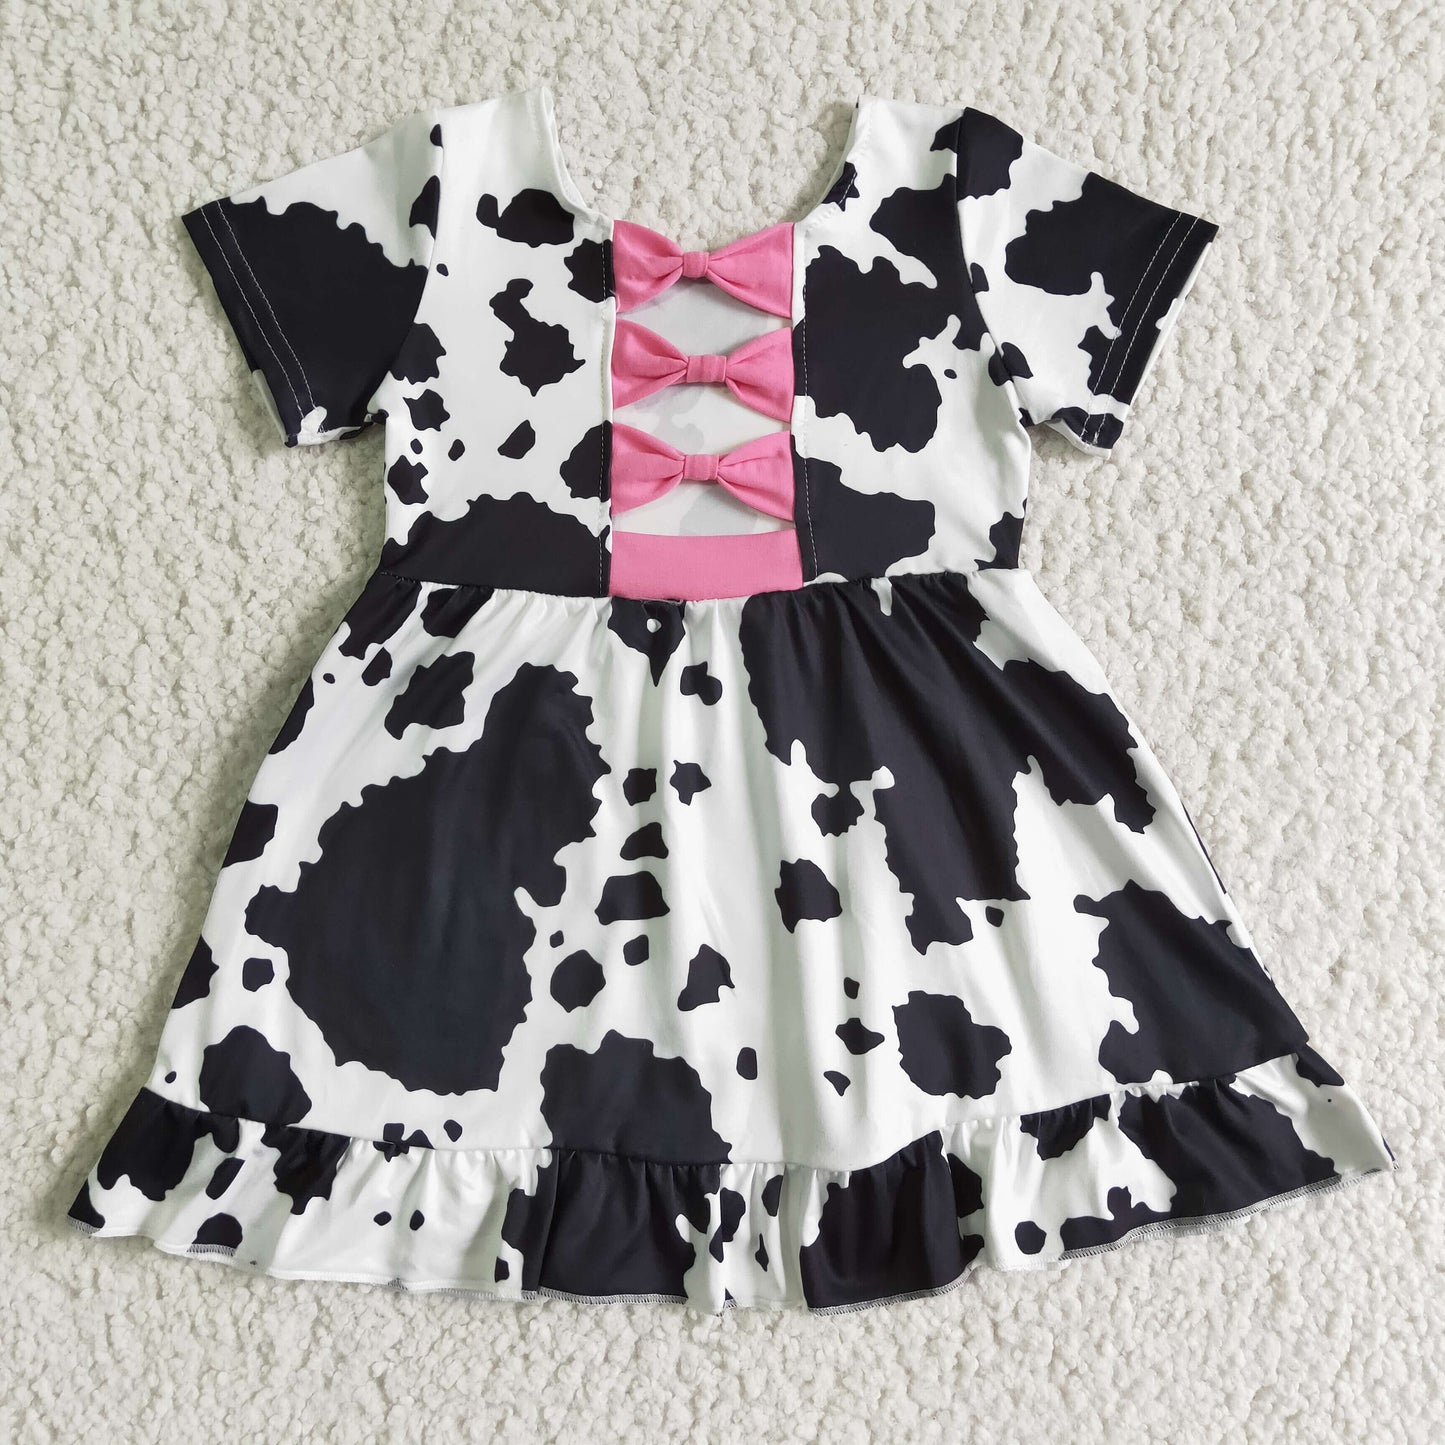 Black cow print short sleeve bow backless baby girls summer dresses